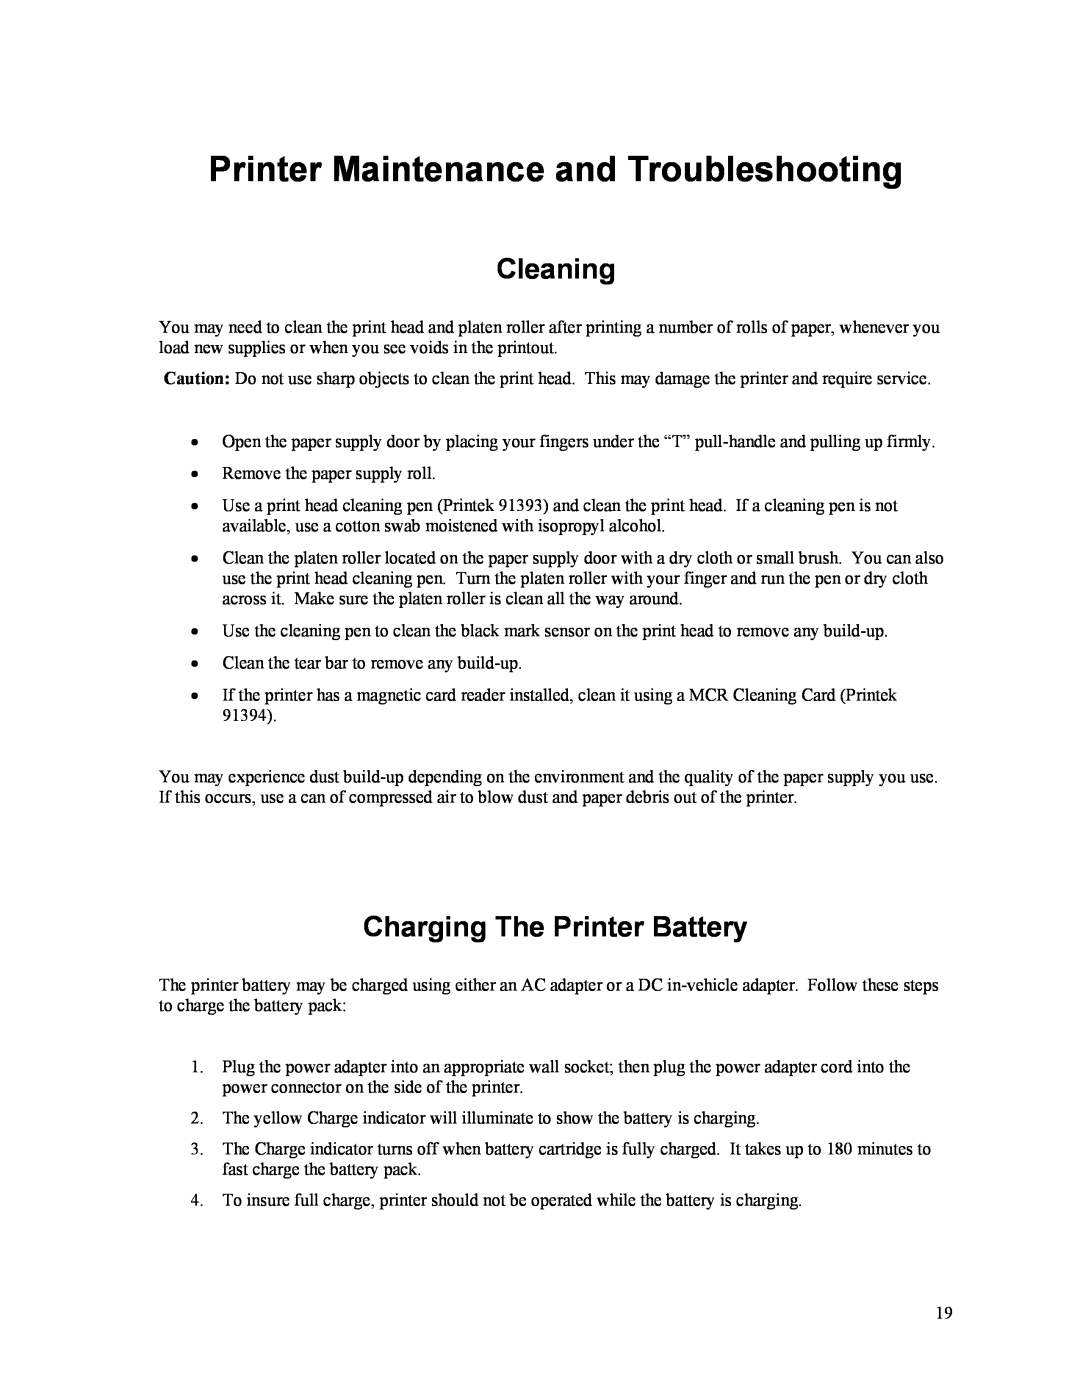 Printek Mt3-II manual Printer Maintenance and Troubleshooting, Cleaning, Charging The Printer Battery 